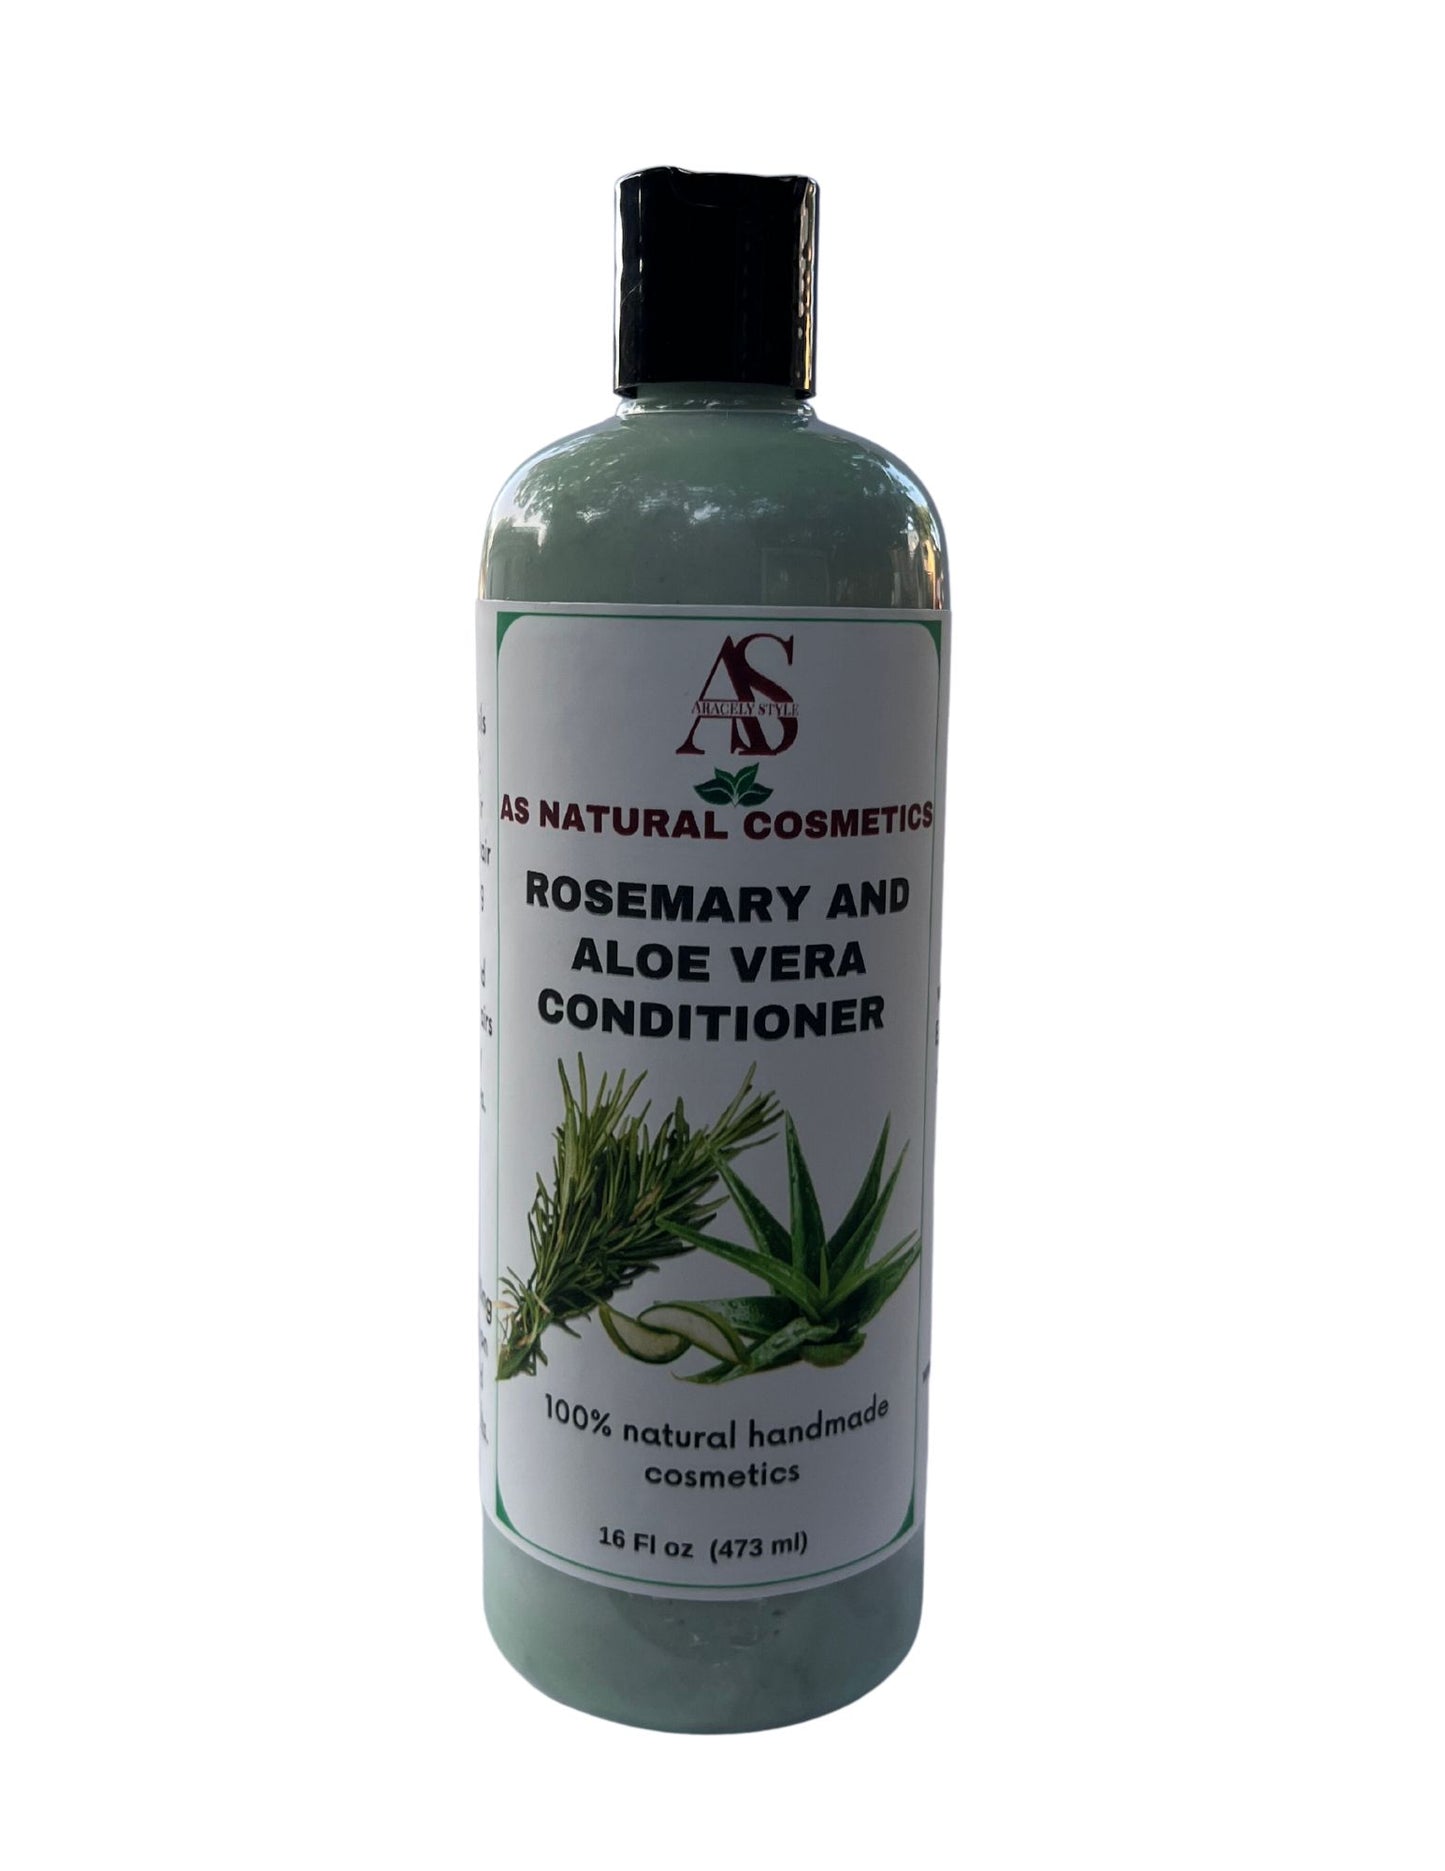 Rosemary & Aloe Vera conditioner